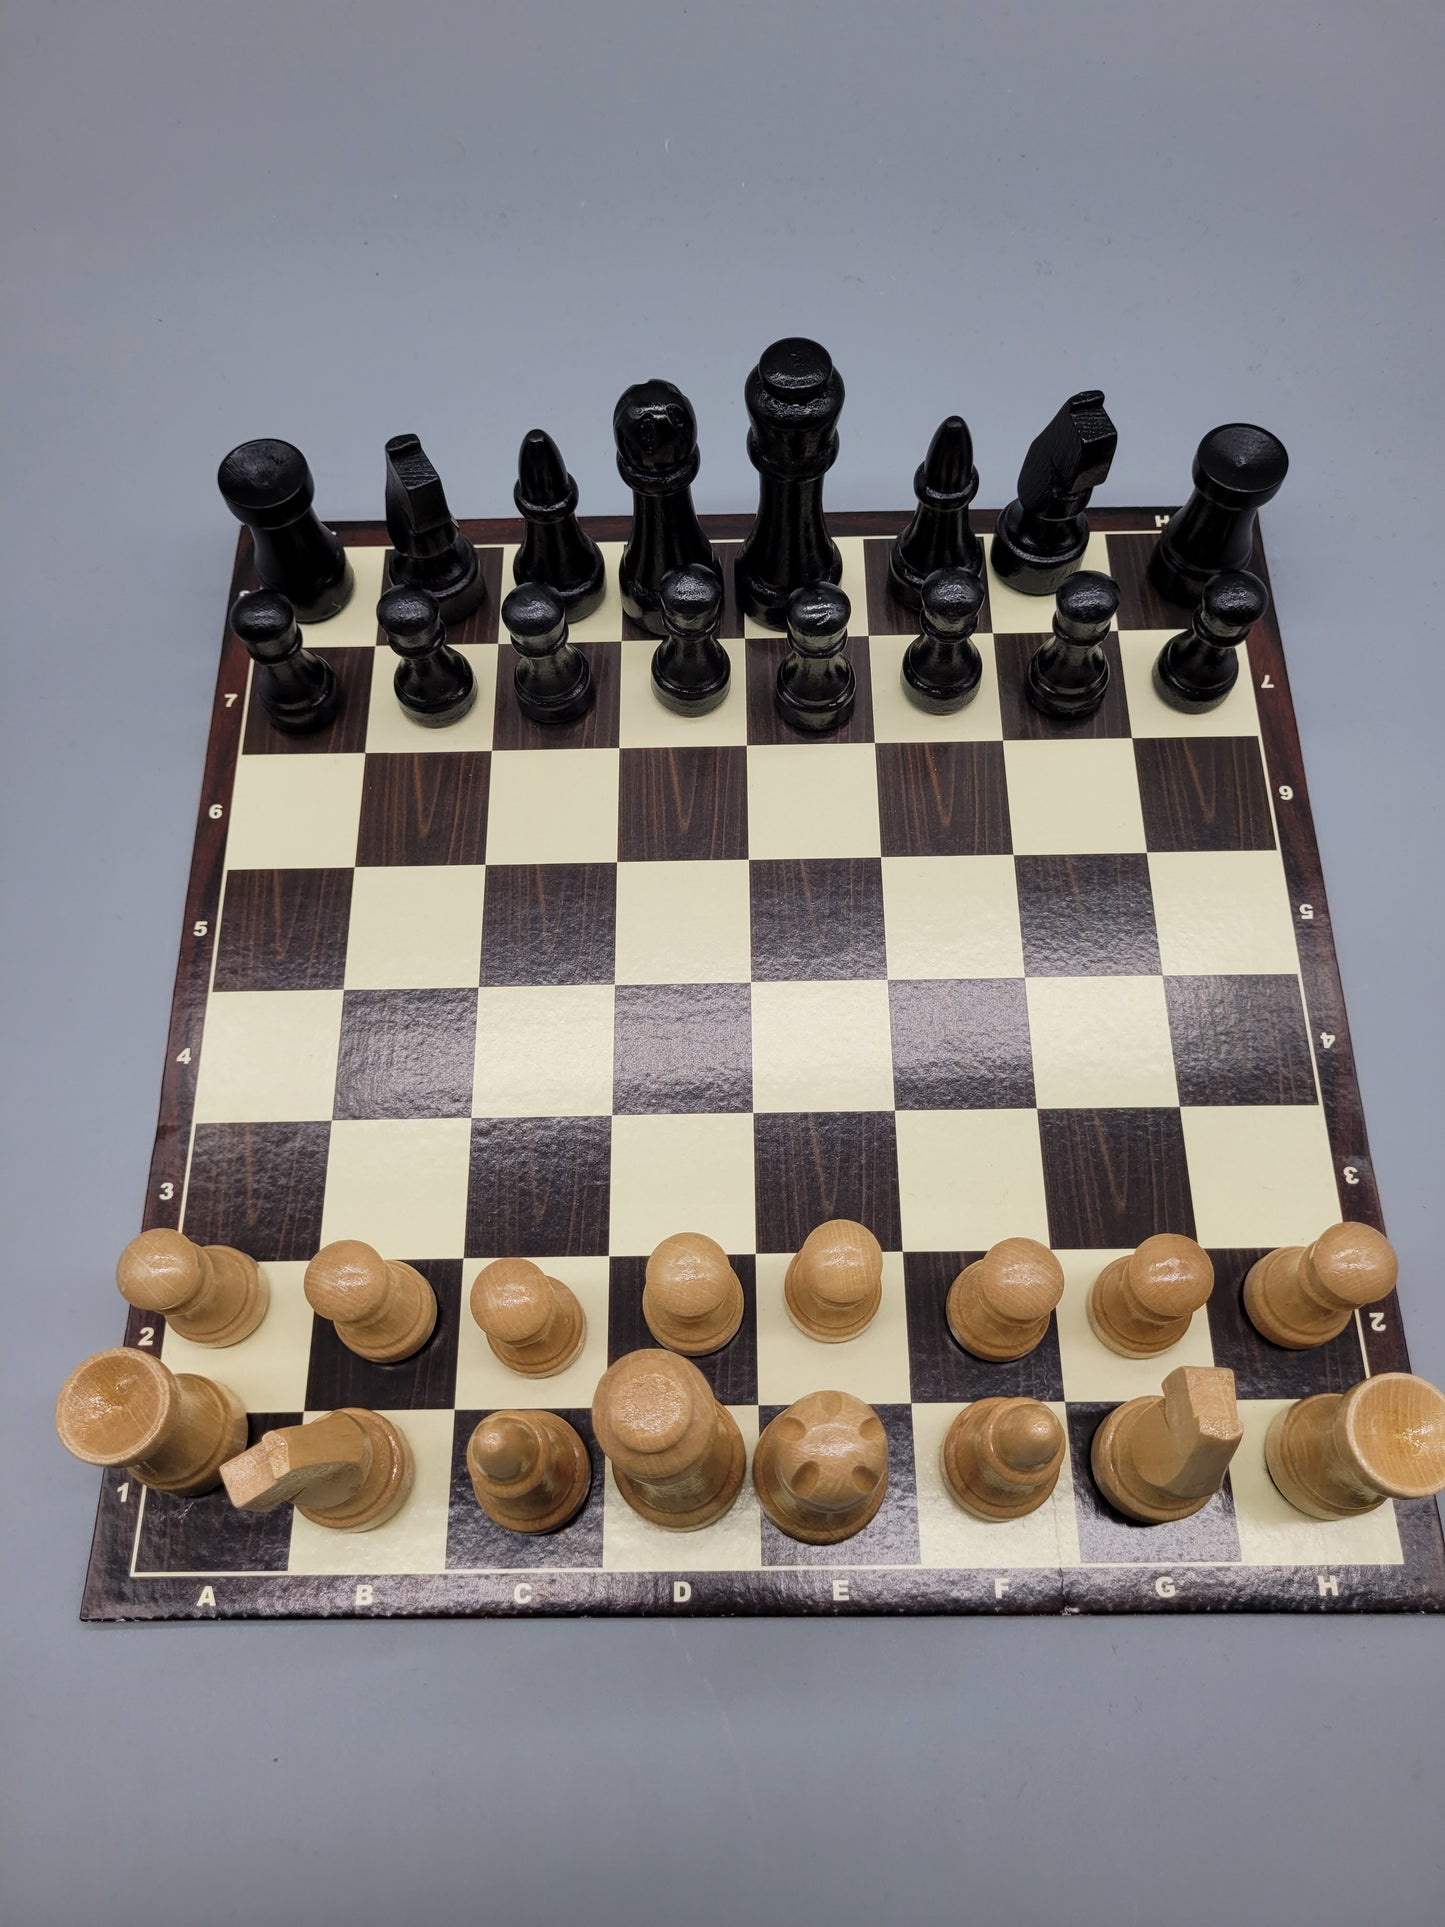 Handgeschnitztes Schachspiel, 32 Figuren inklusive Schachbrett